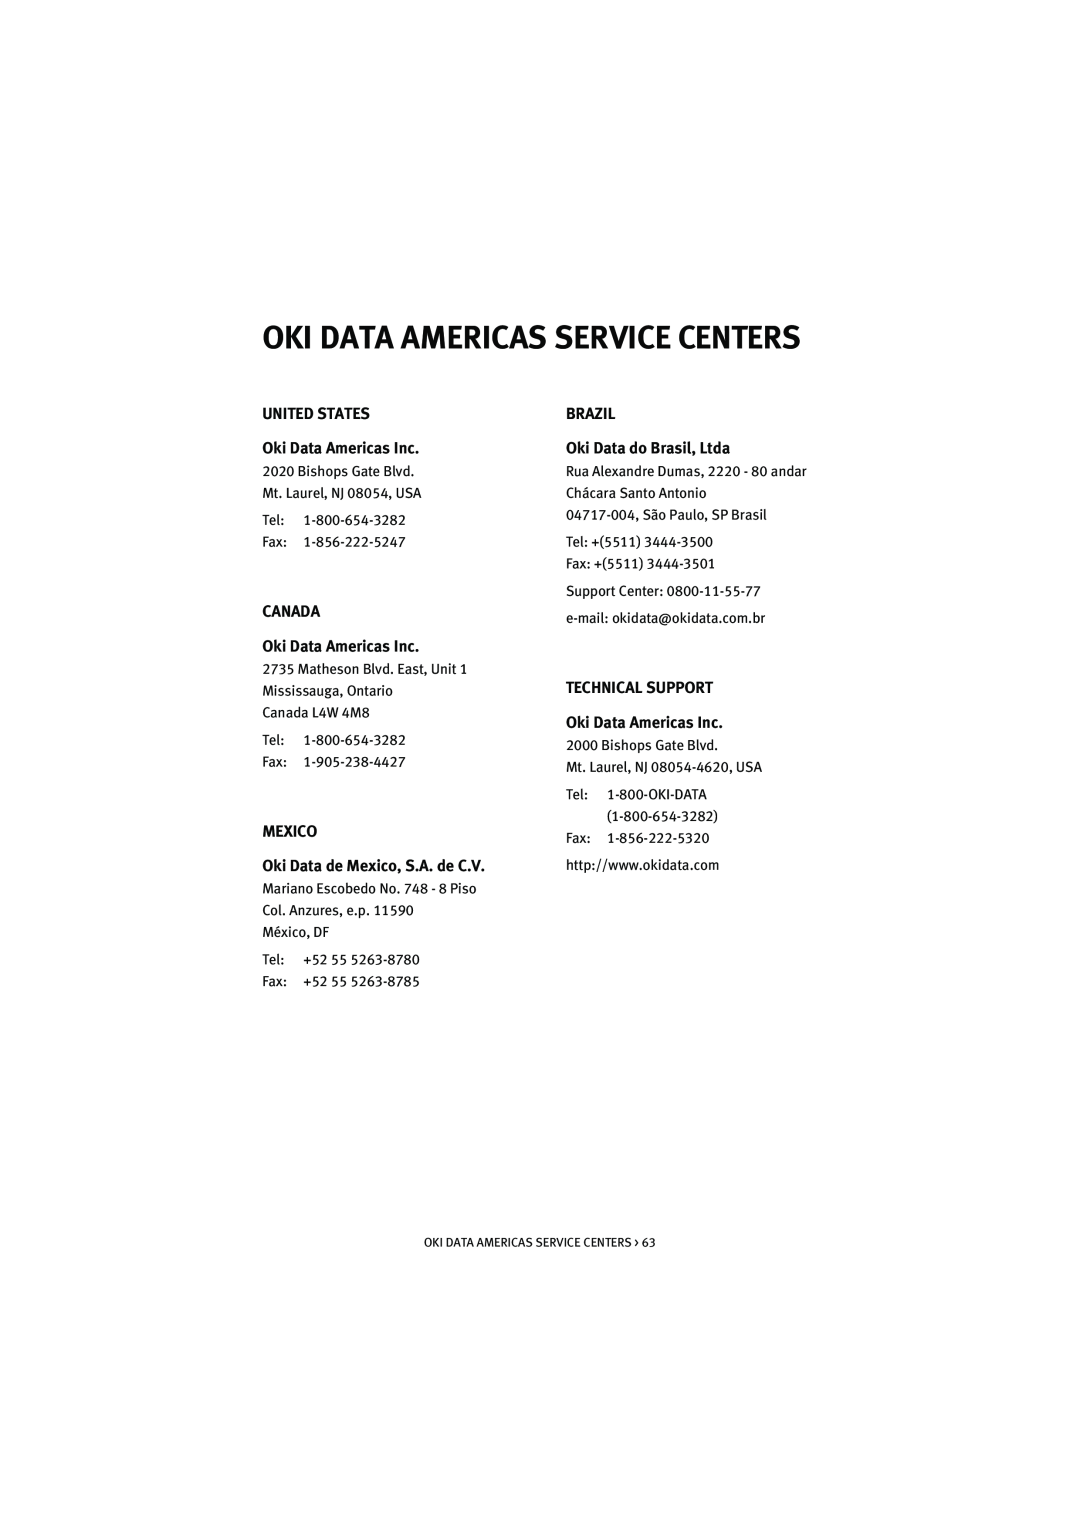 Oki S700 Oki Data Americas Service Centers, UNITED STATES Oki Data Americas Inc, CANADA Oki Data Americas Inc, Brazil 